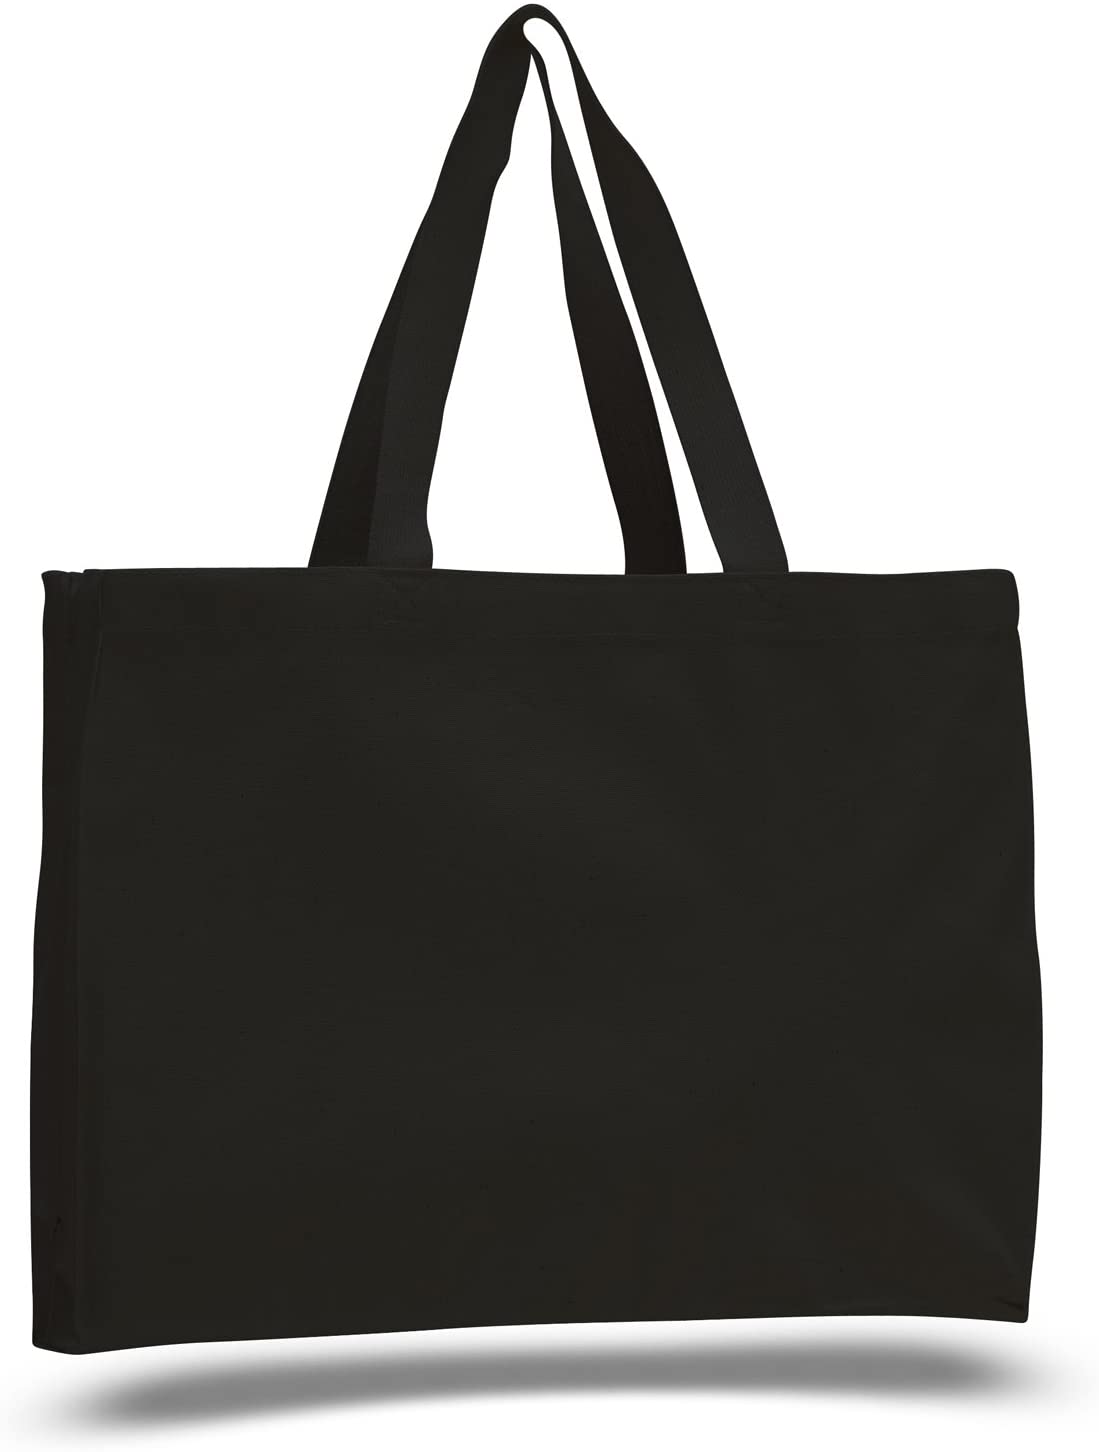 Bulk Heavy Canvas Shopping Tote Bags, Reusable Grocery Shopper Totes Wholesale black